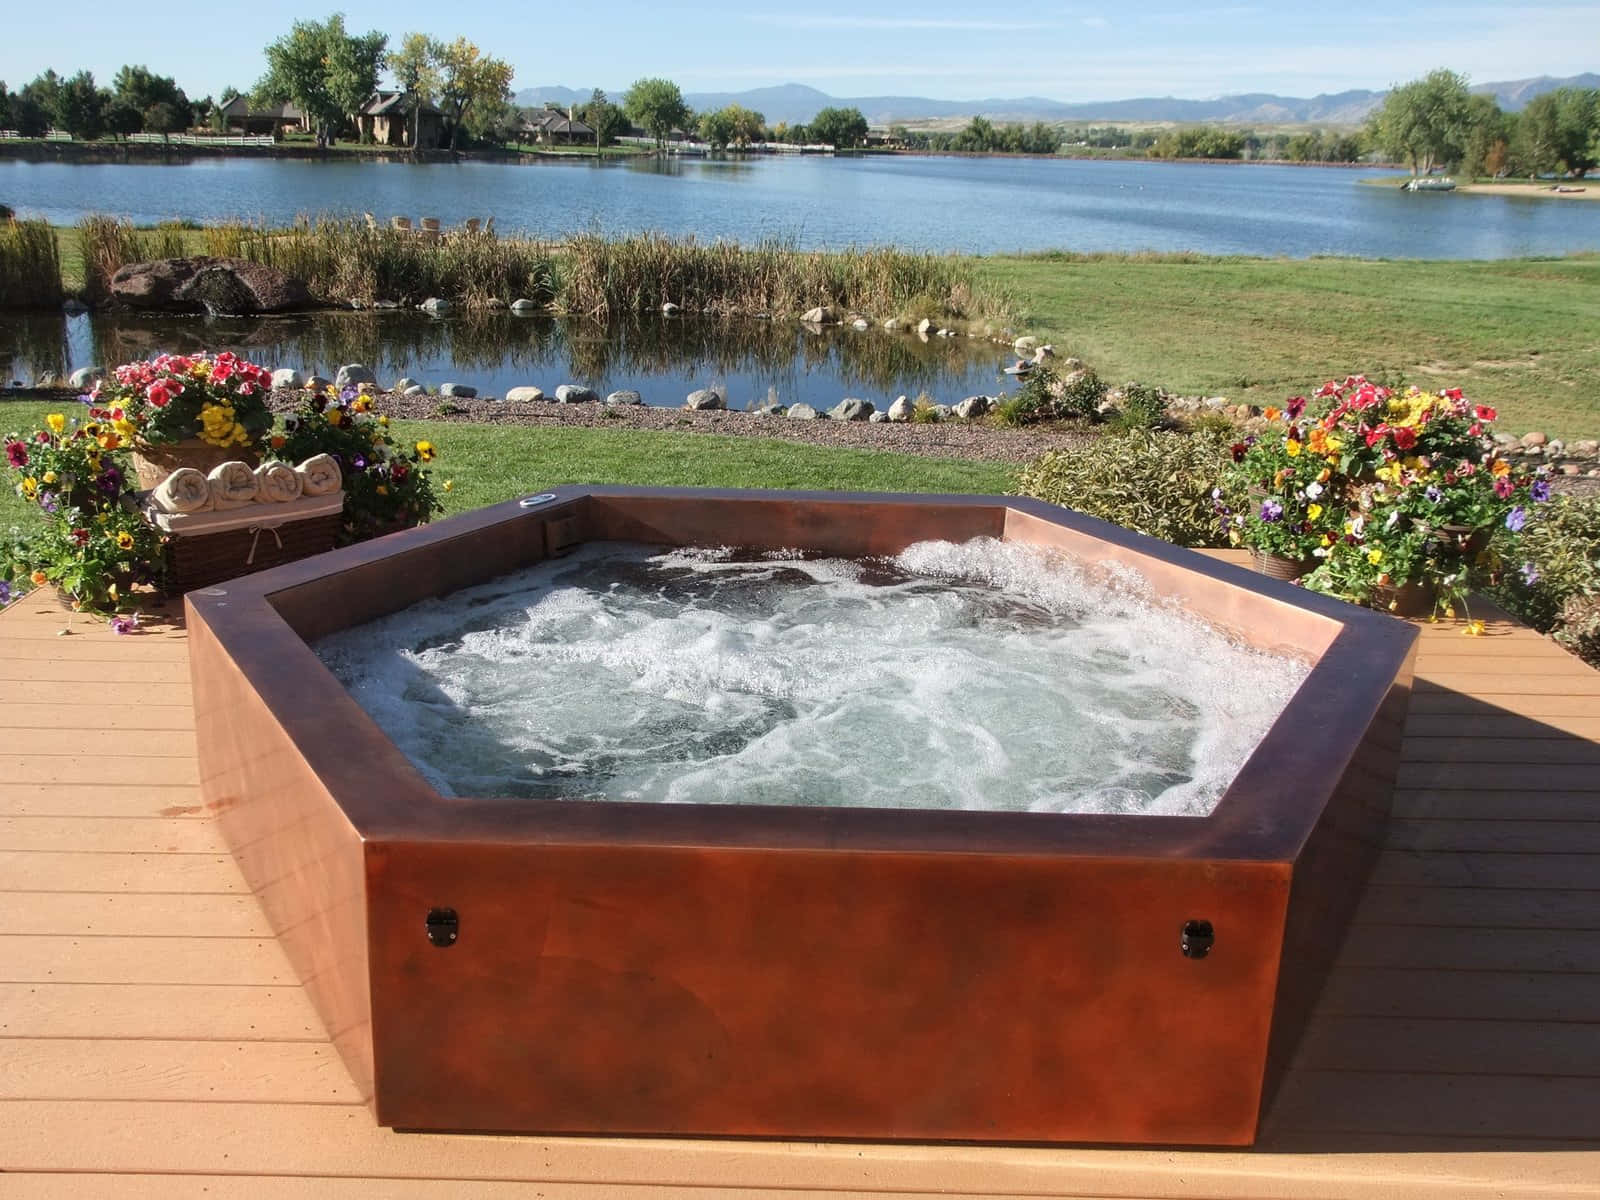 Lakeside Hot Tub Relaxation Wallpaper